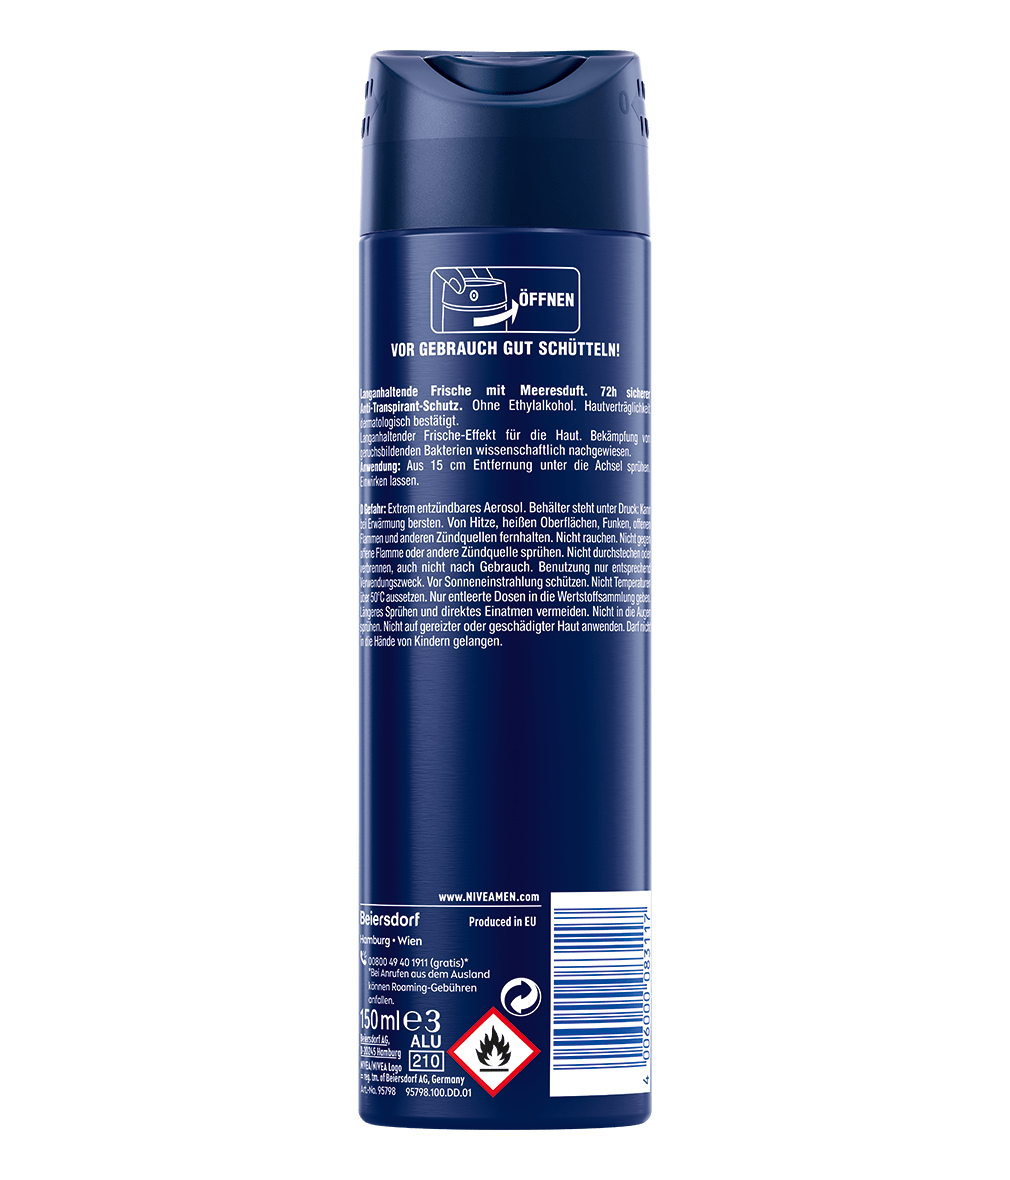 NIVEA MEN Ultra Charge Limited Football Edition	Anti-Transpirant Spray 150ml